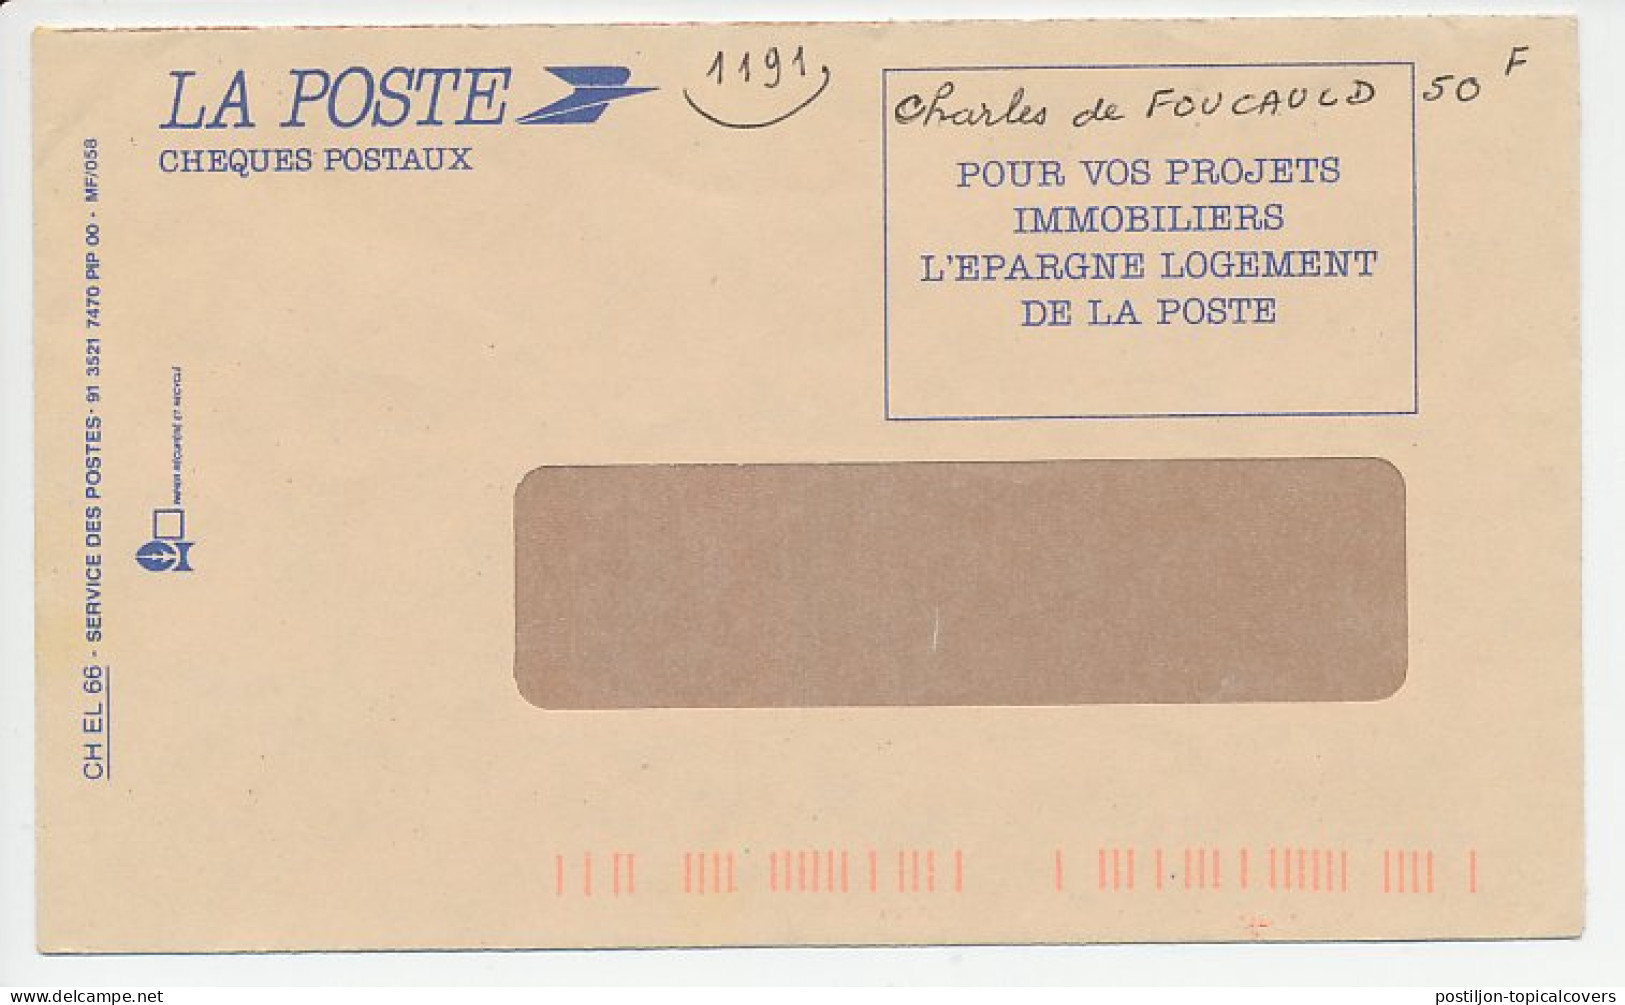 Postal Cheque Cover France 1991 Phone Card - Alumni - Combatants - War Victims - Telekom